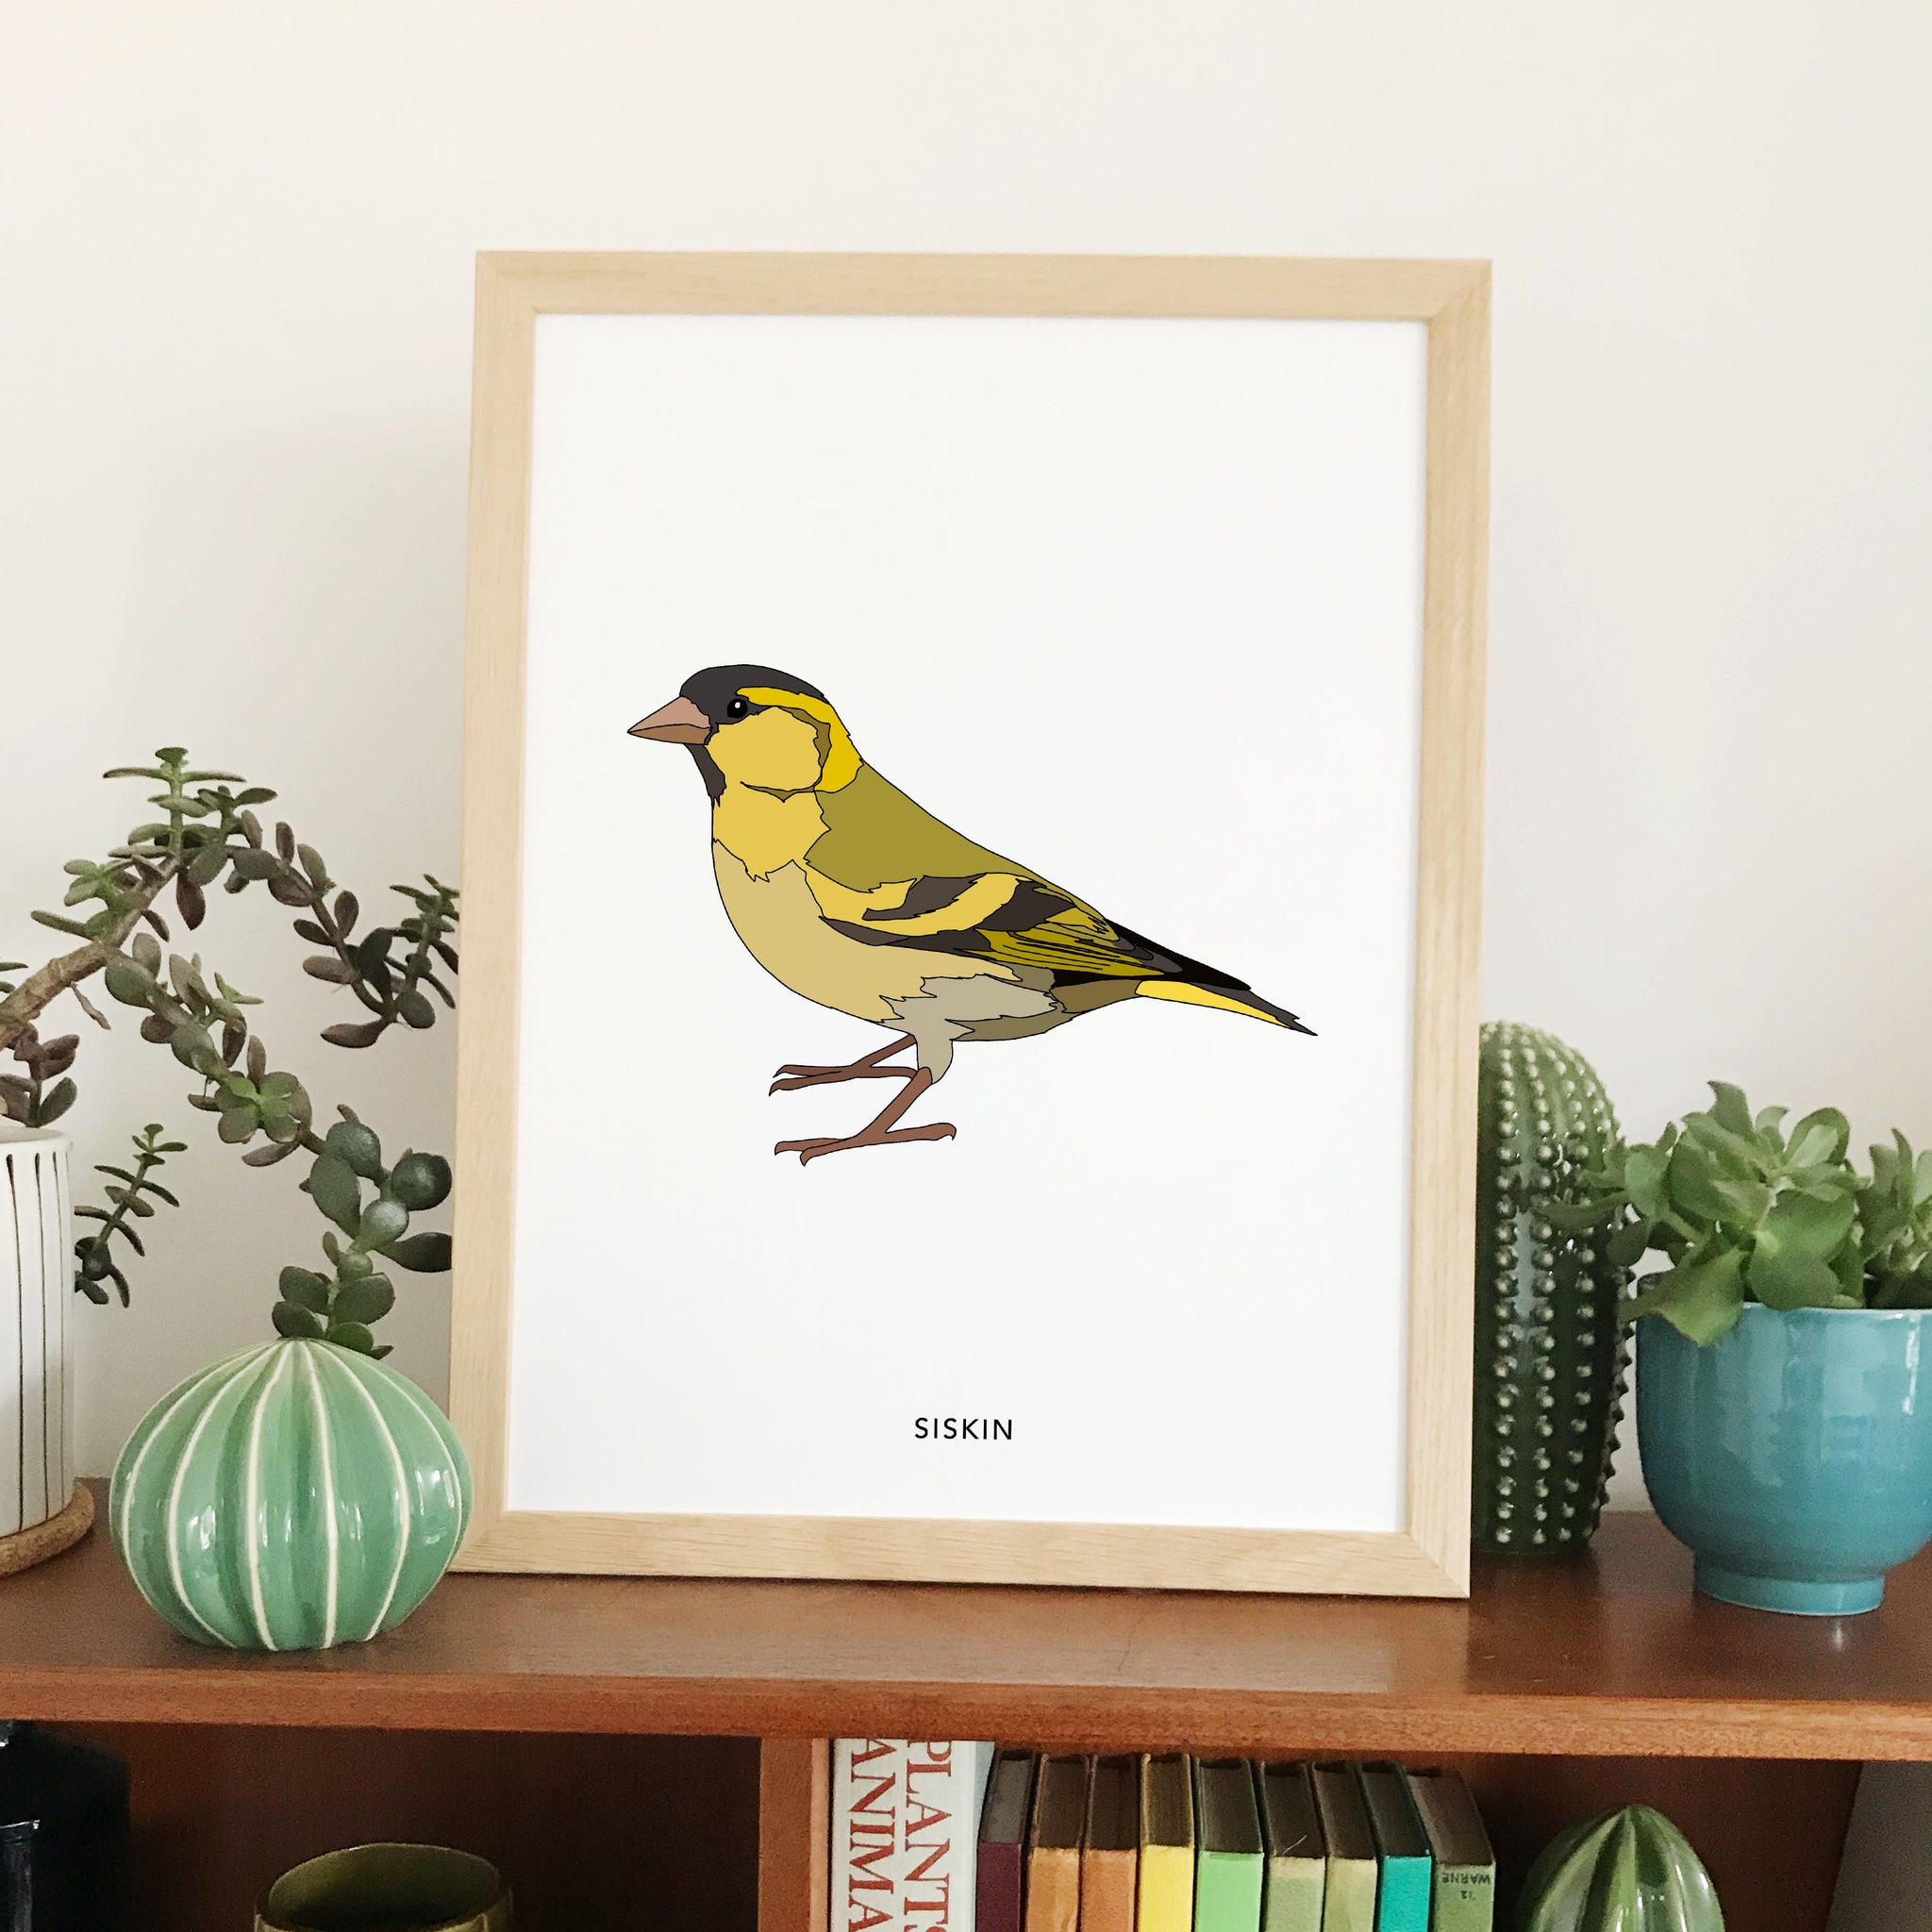 Siskin bird print